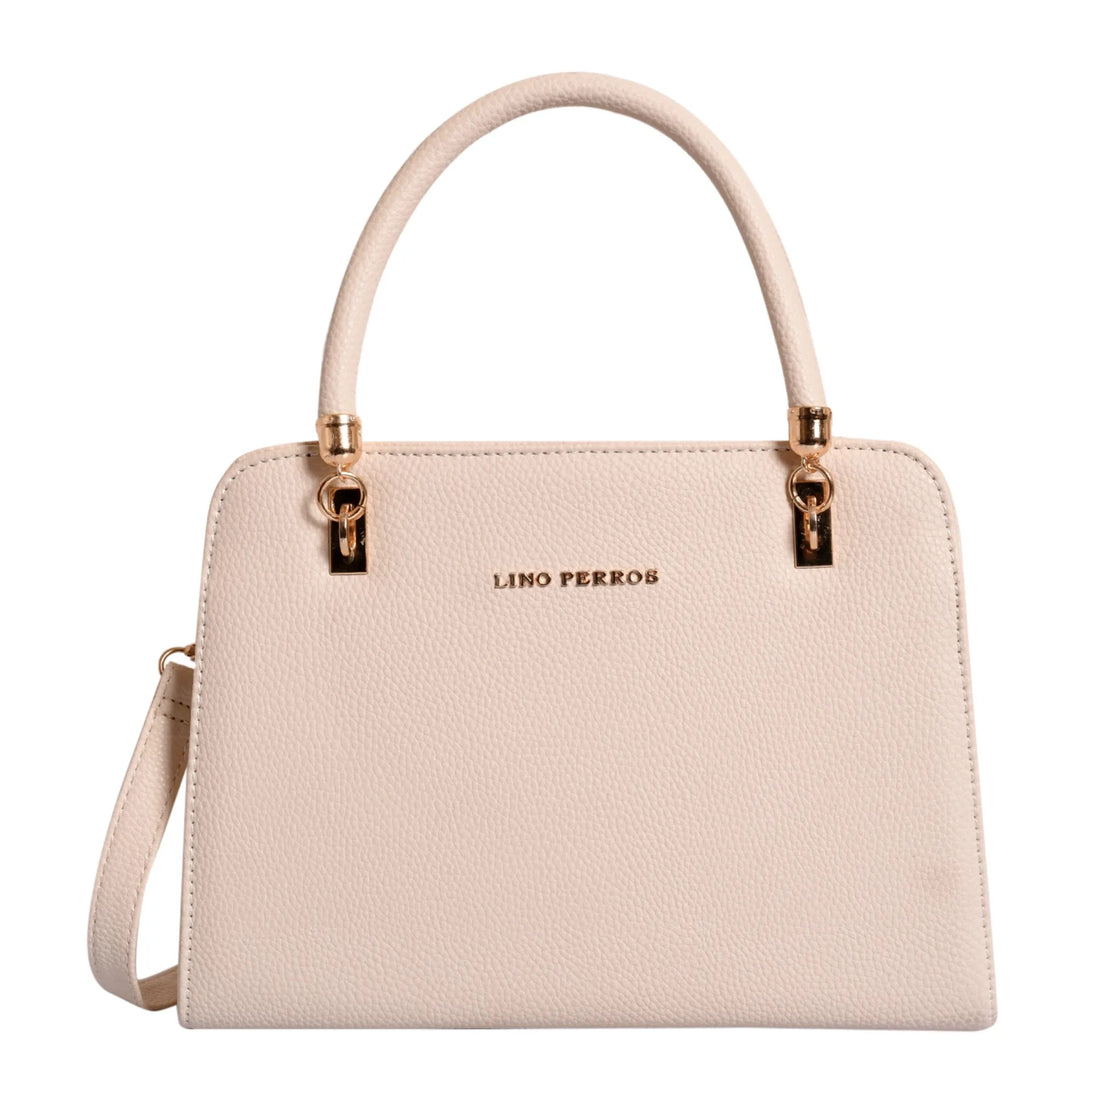 Handbags for Women: Stylish and Designer Bags for Girls | Linoperros